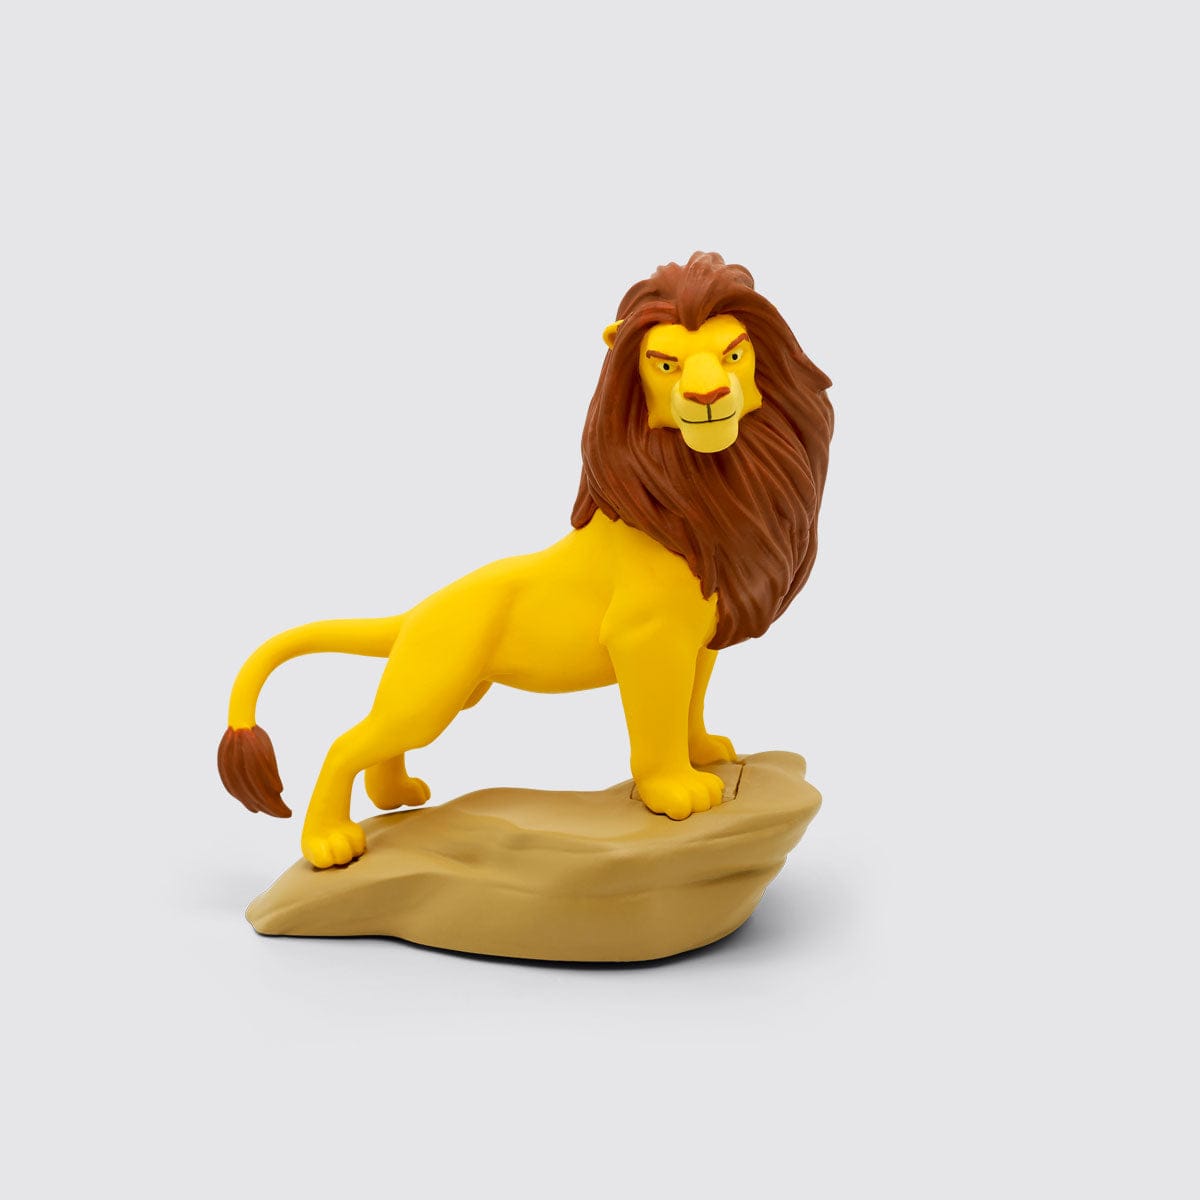 tonies® I Disney The Lion King Tonie I Buy now